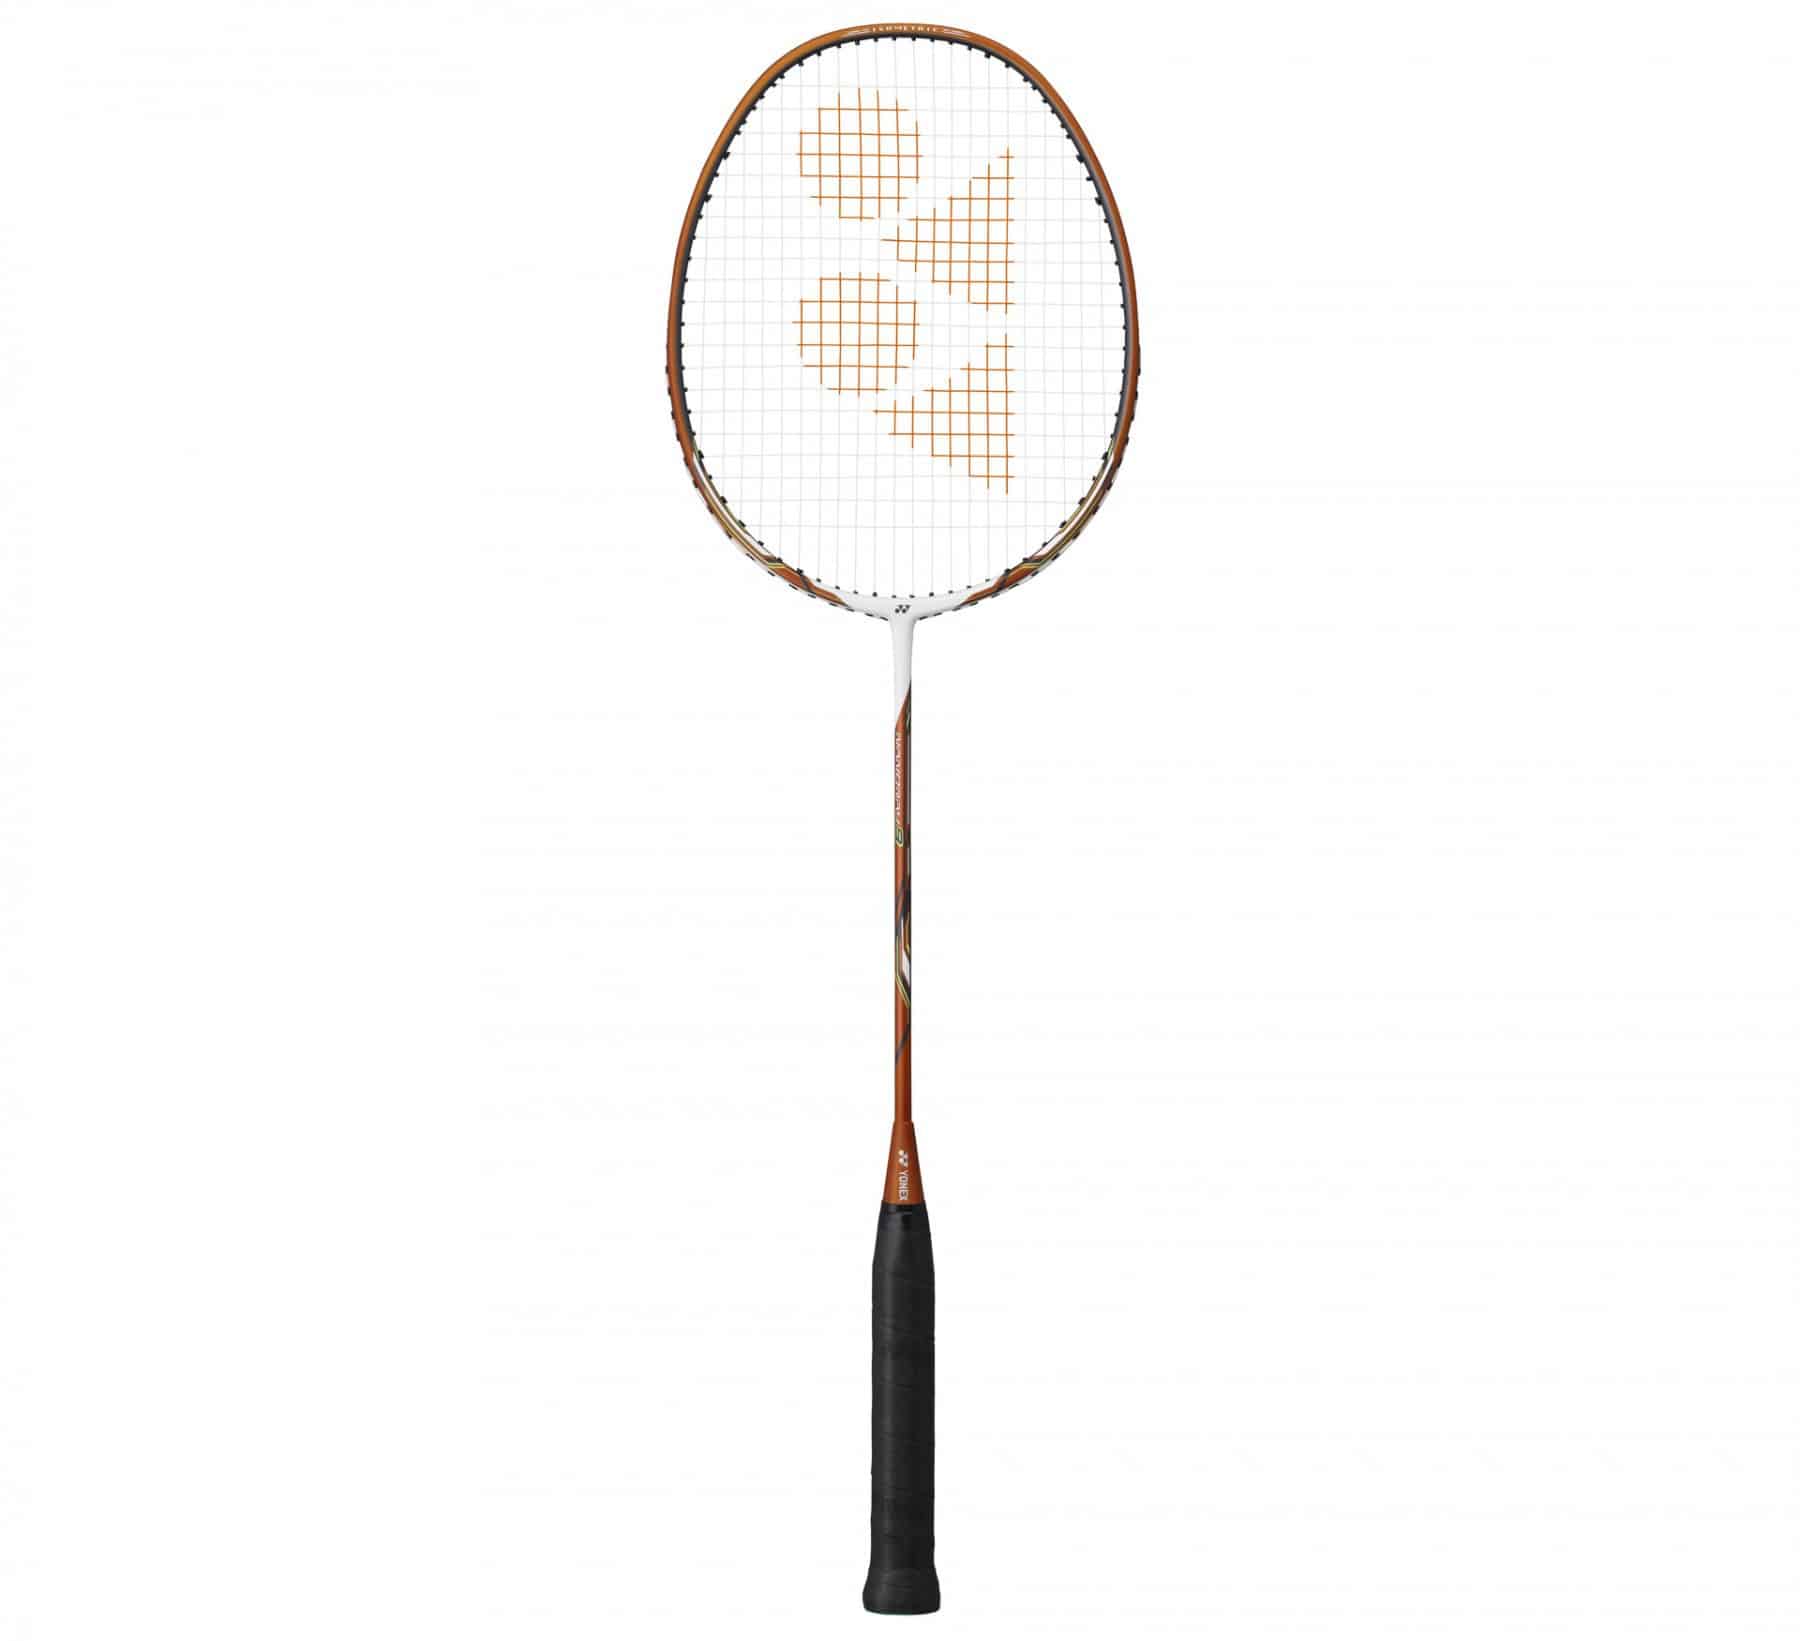 Yonex badmintonrackets behoren tot de beste